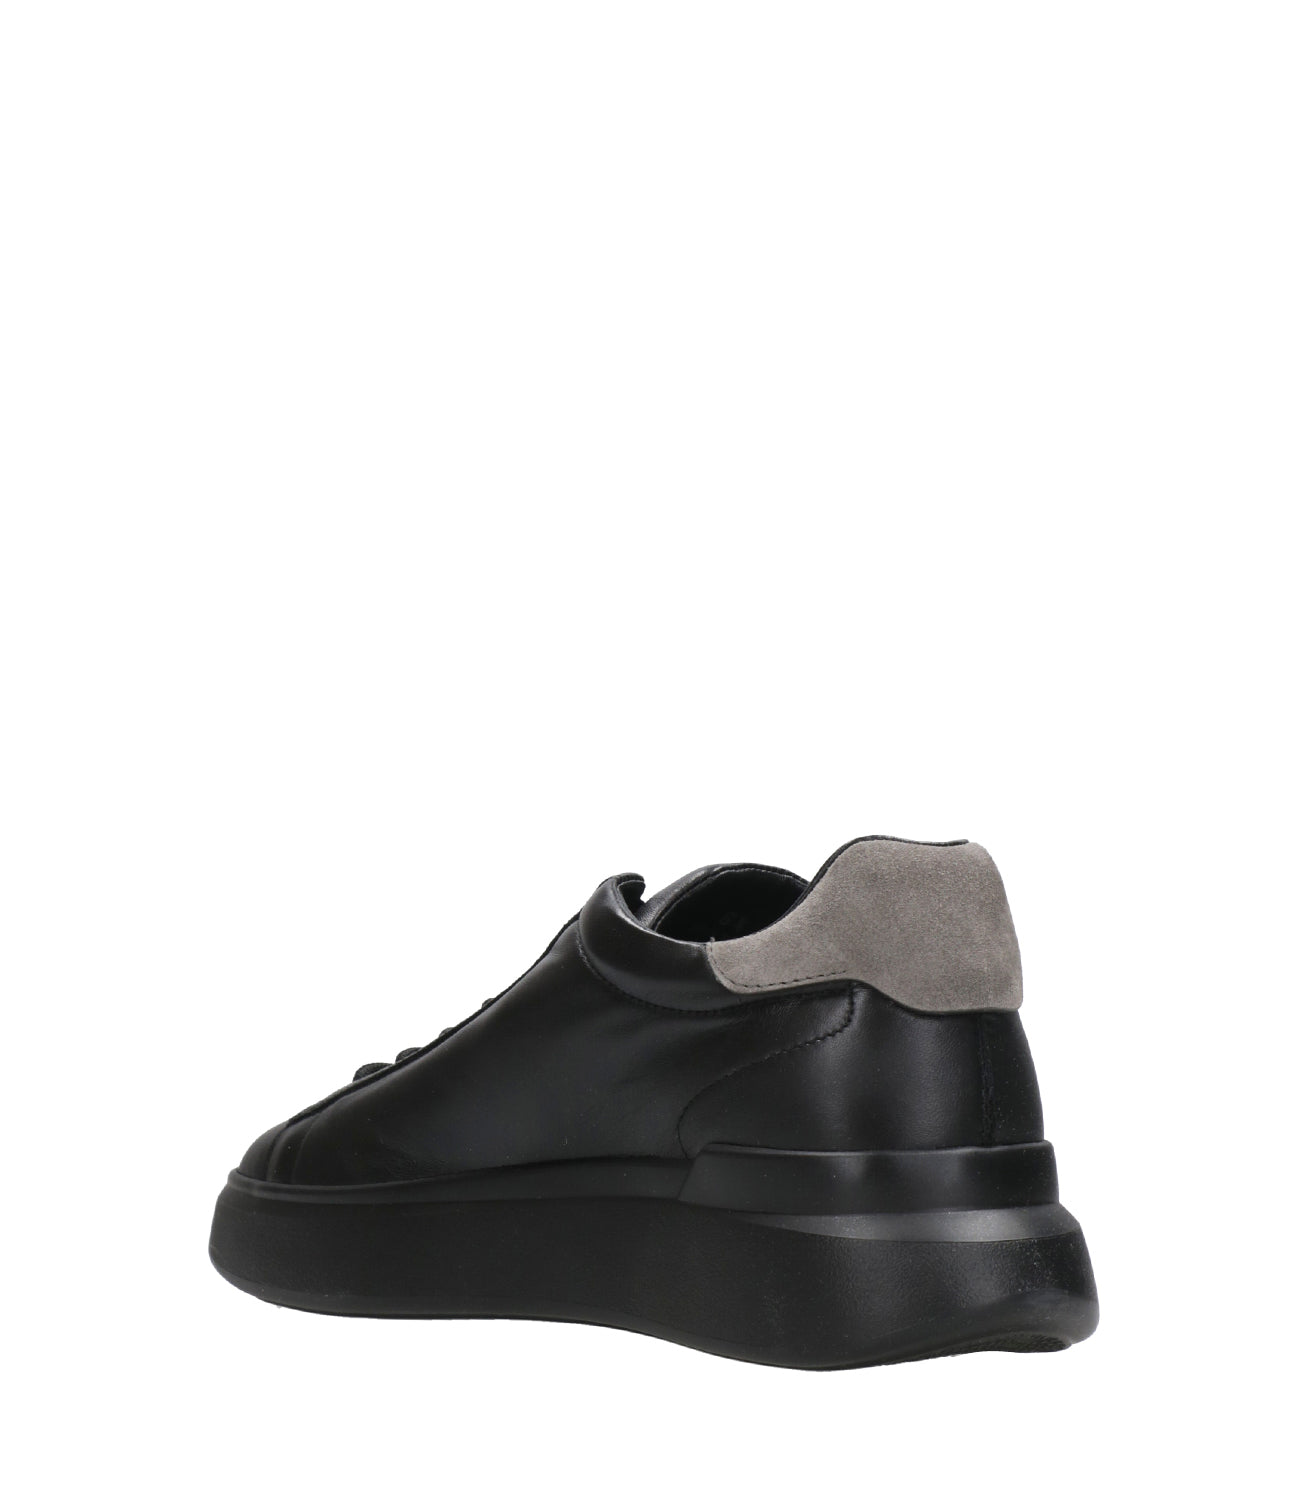 Hogan | Sneakers H580 Lace-up H Slash Black and Gray